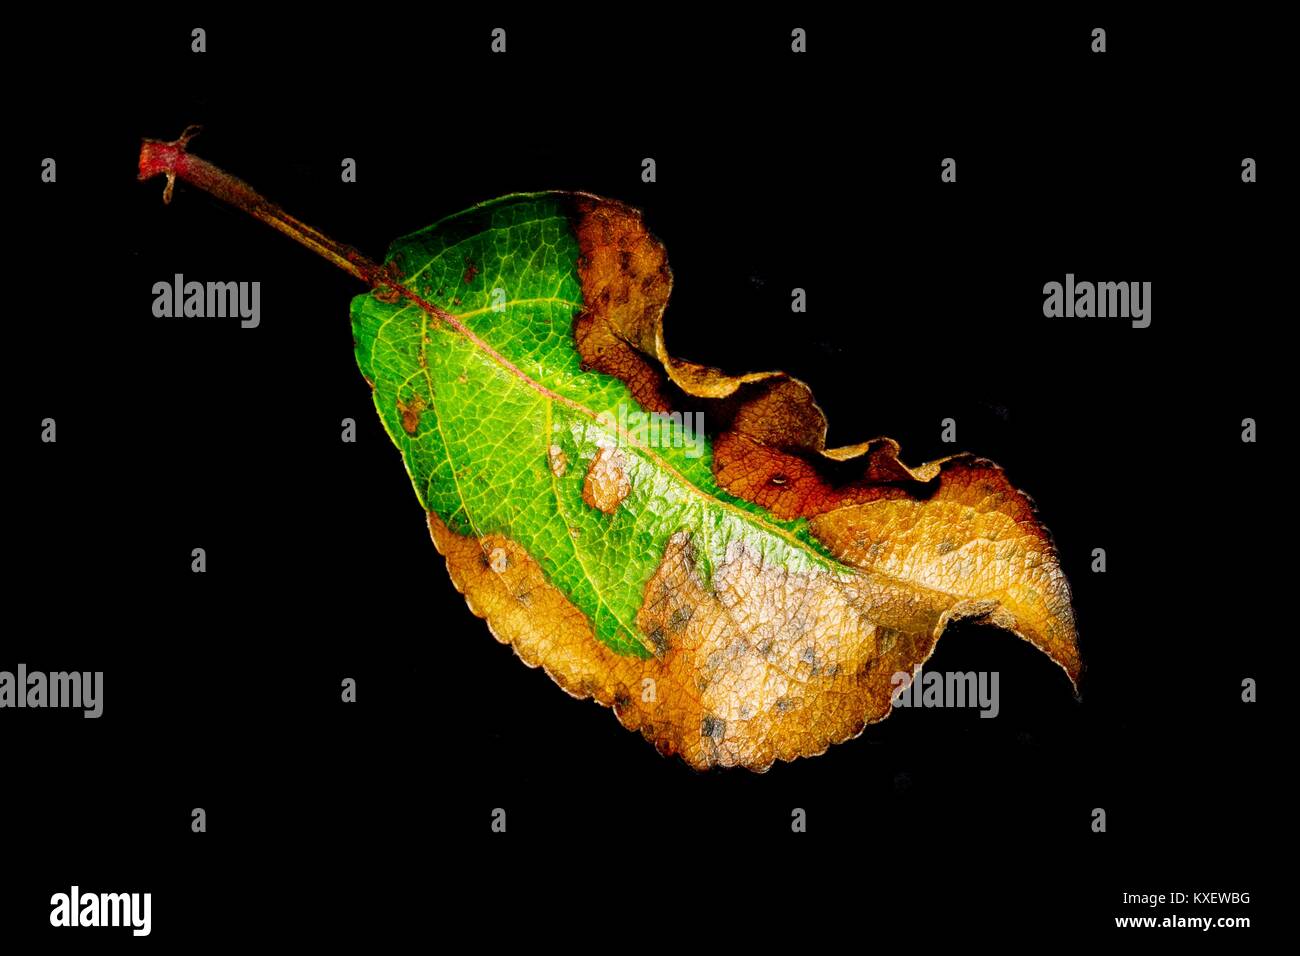 Isolated Leaf with black background Stock Photo